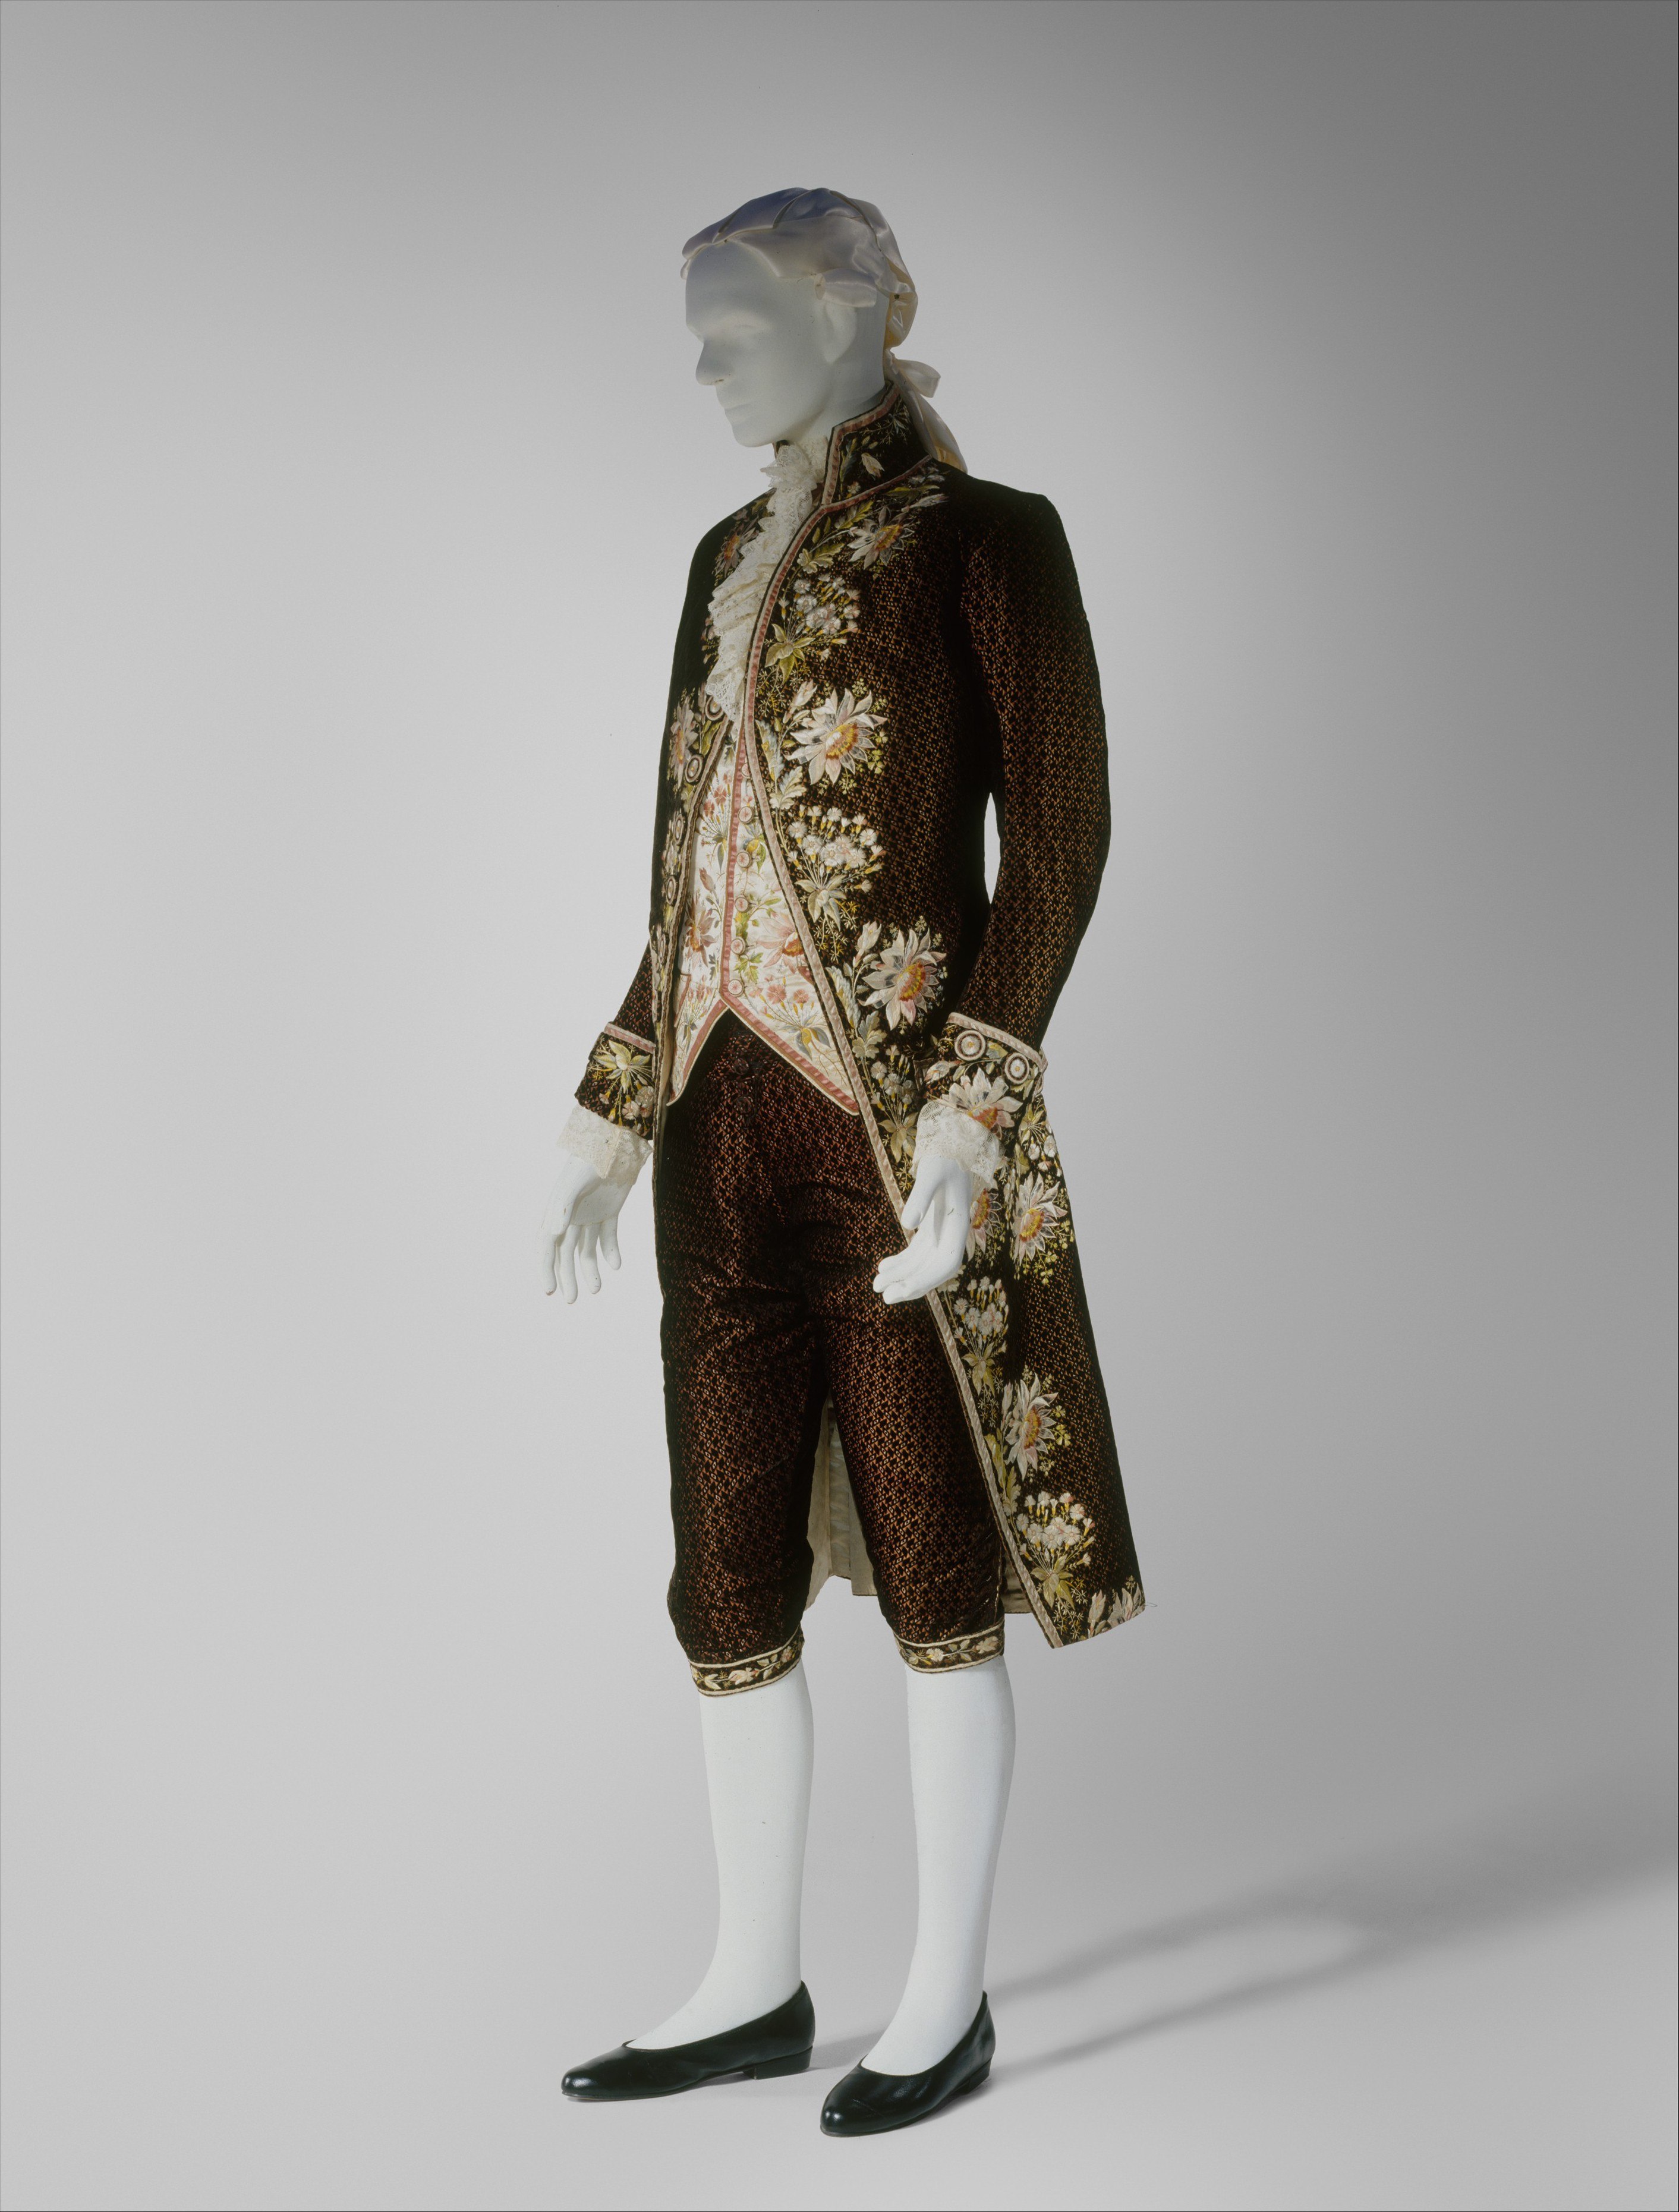 Костюмы 18 века. Рококо мода 18 века мужской костюм. Мода рококо 18 век мужская. Рококо одежда 18 века мужская. Рококо 19 век мужская мода.